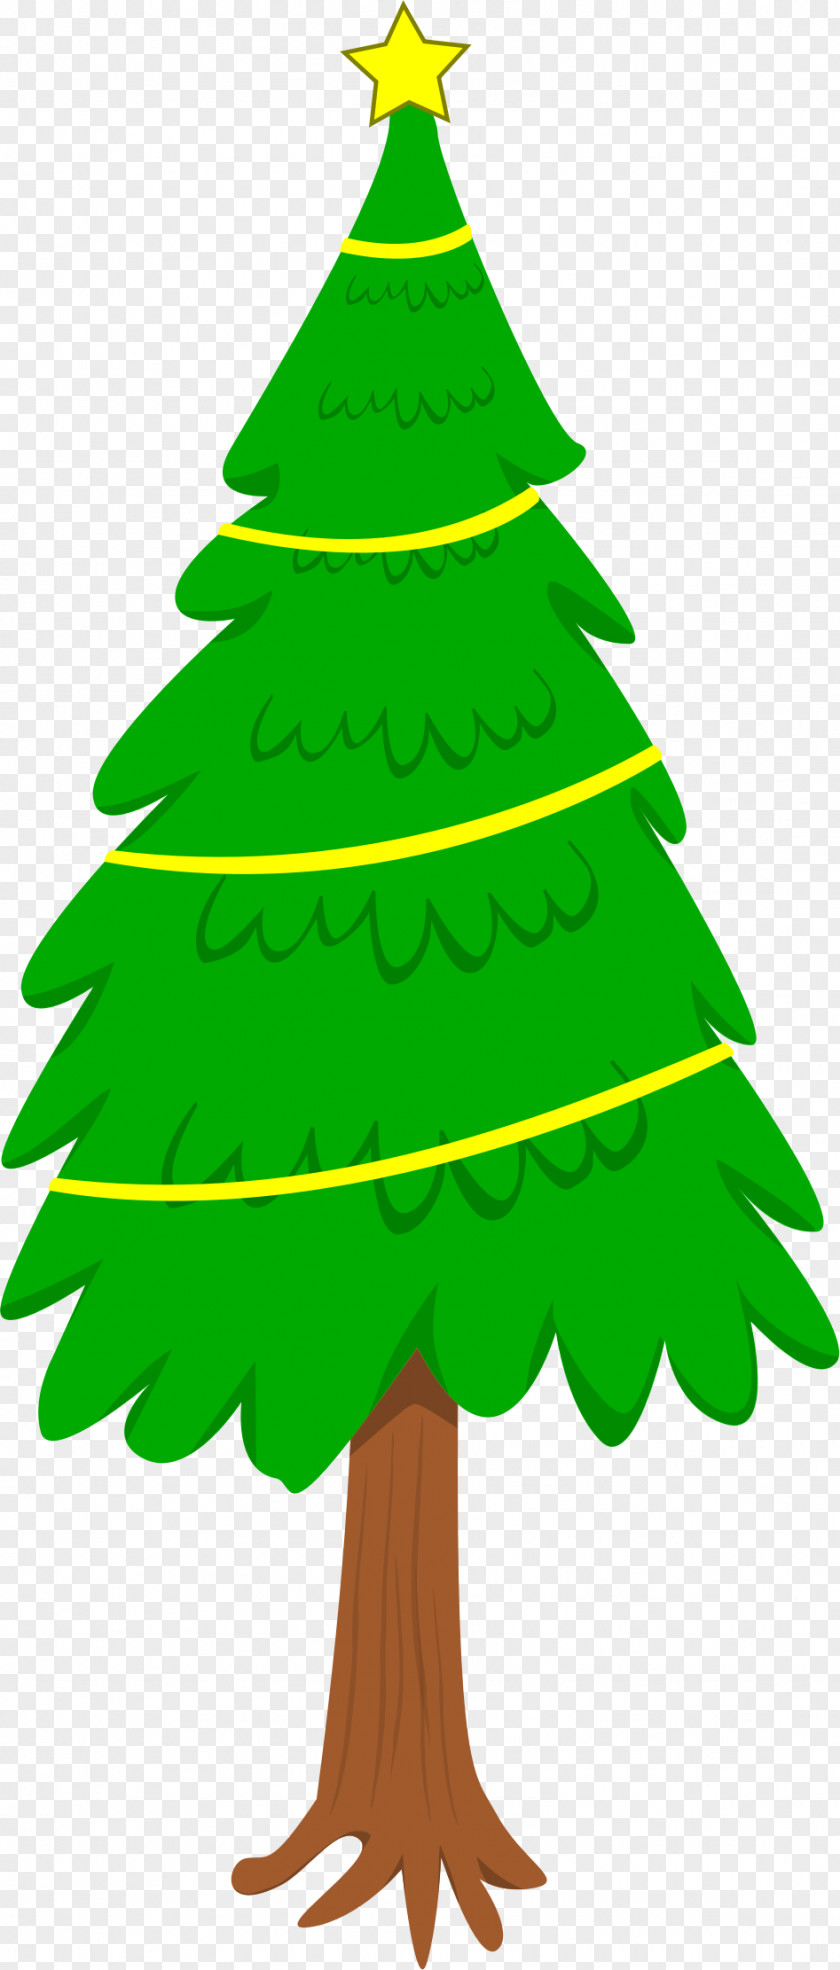 Fir-tree Christmas Tree Ornament Clip Art PNG